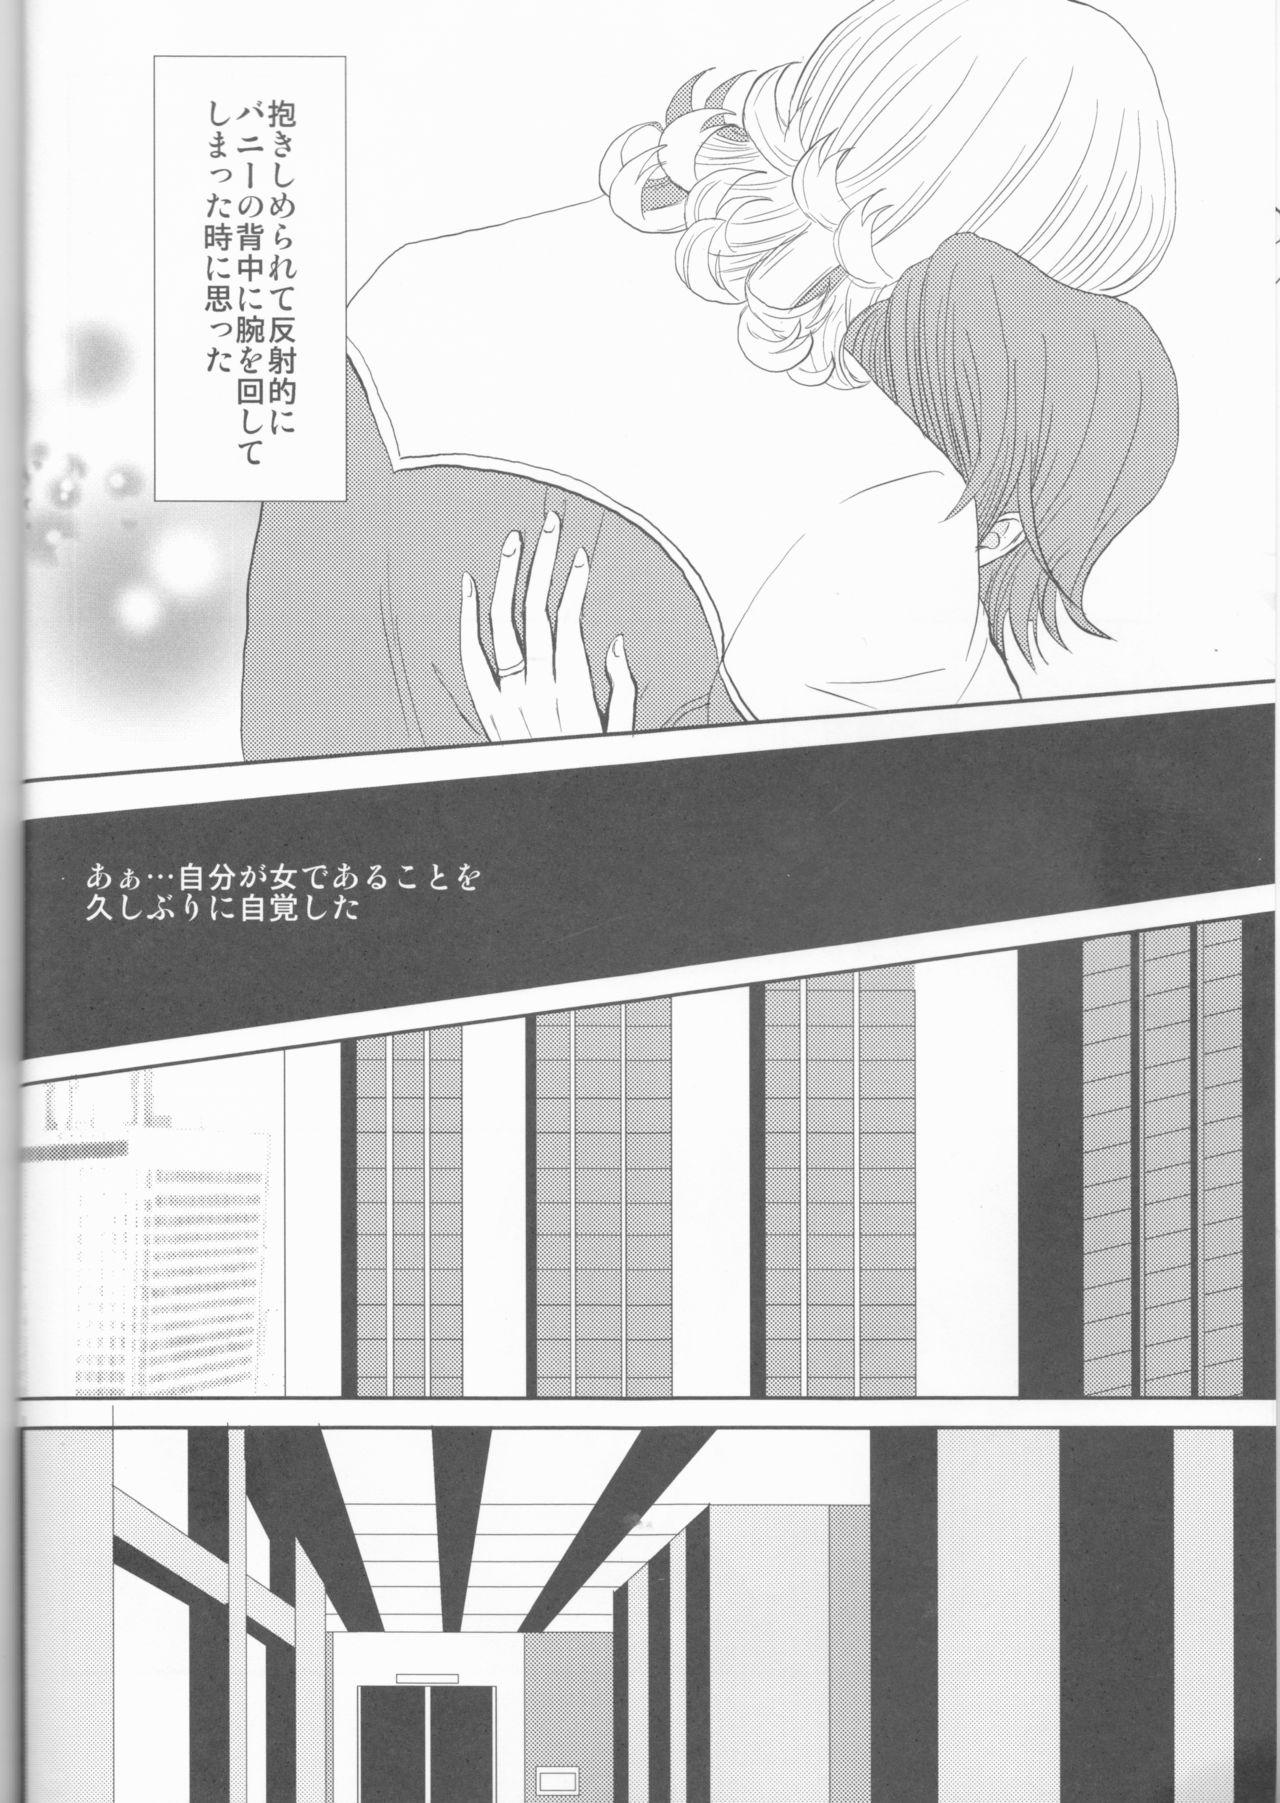 Adult Itsuka wa inaku naru kimi e - Tiger and bunny Bottom - Page 5